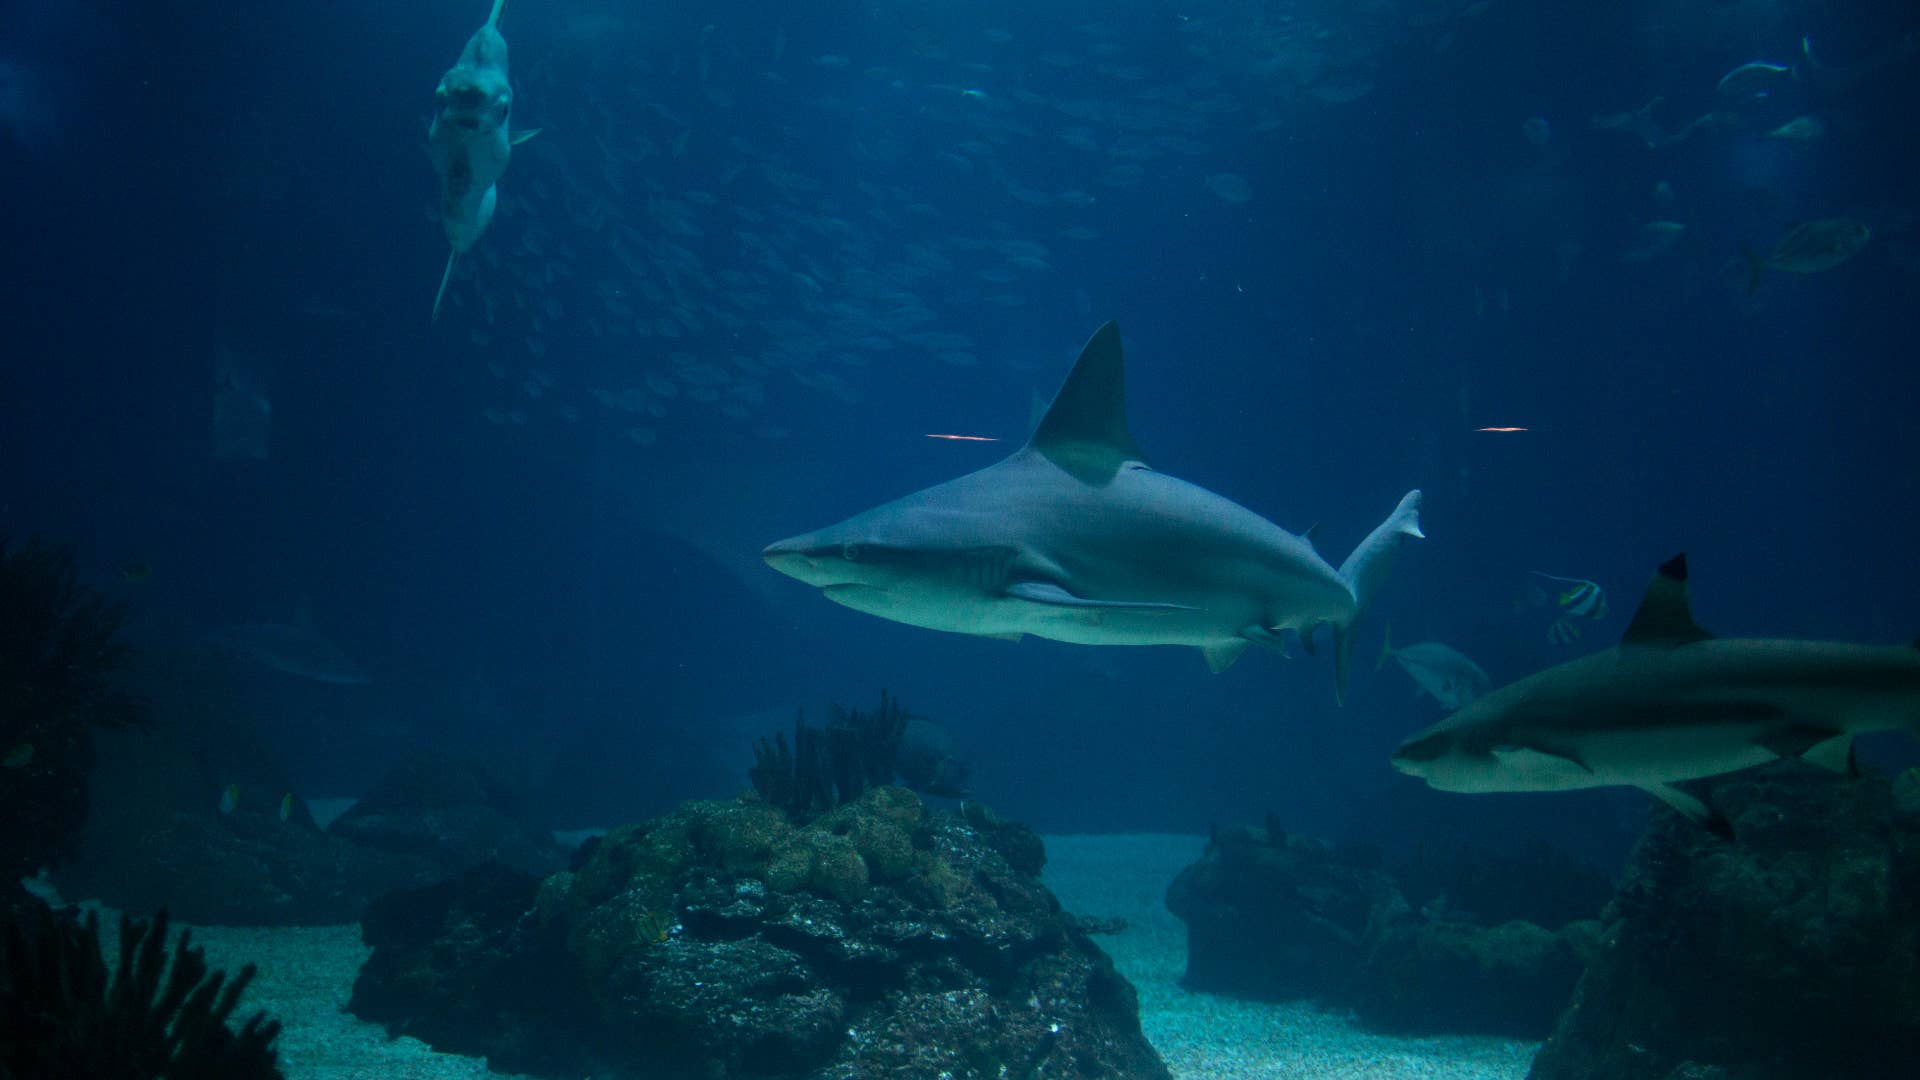 A shark swims in the main tank of the oceanarium in Lisbon, Portugal.